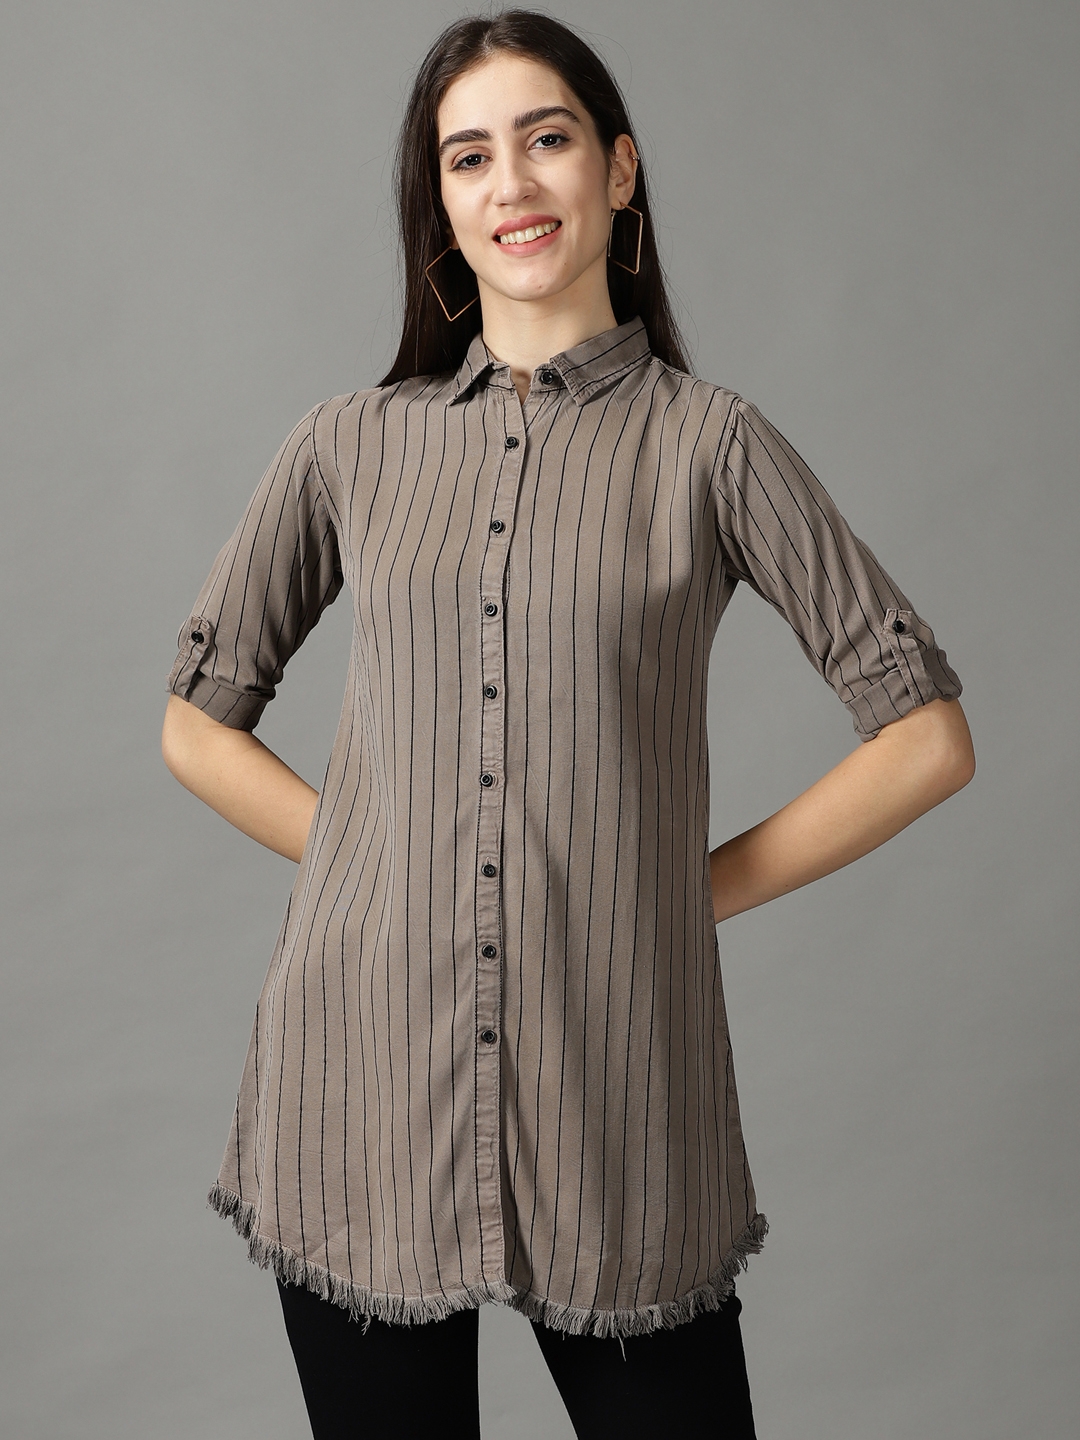 Women's Grey Cotton Striped Casual Shirts